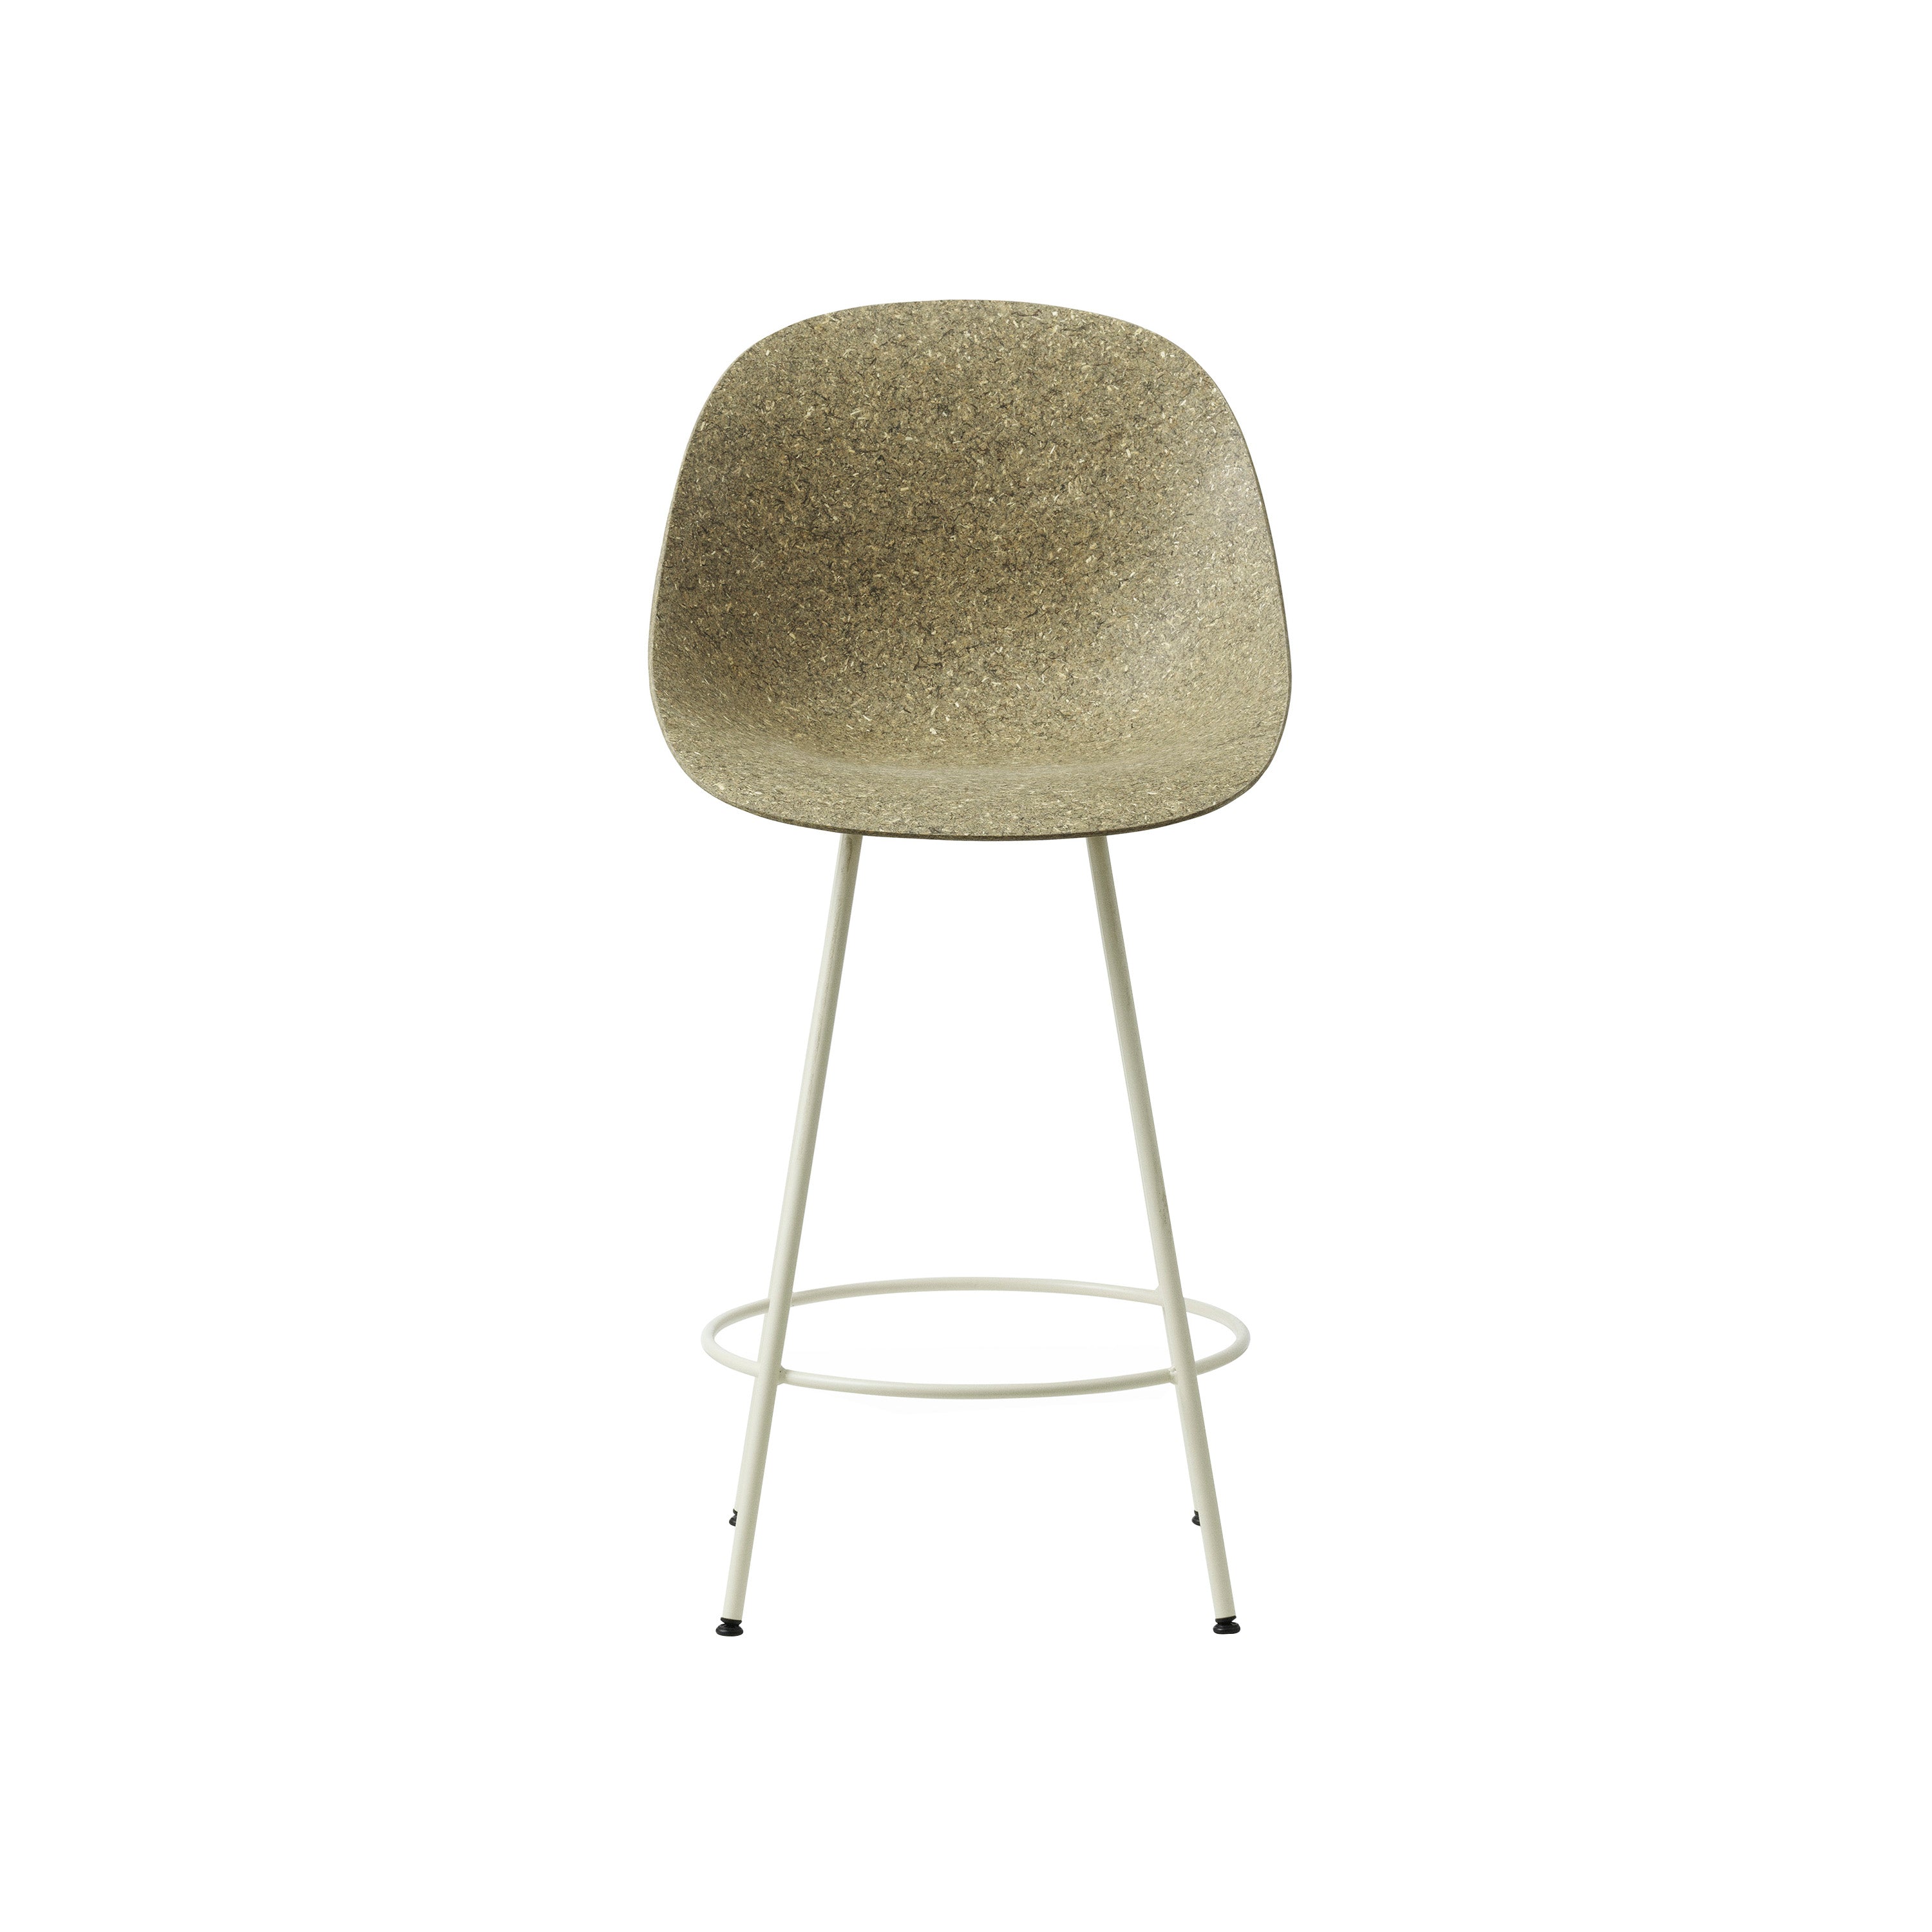 Mat Bar + Counter Chair: Counter + Seaweed + Cream